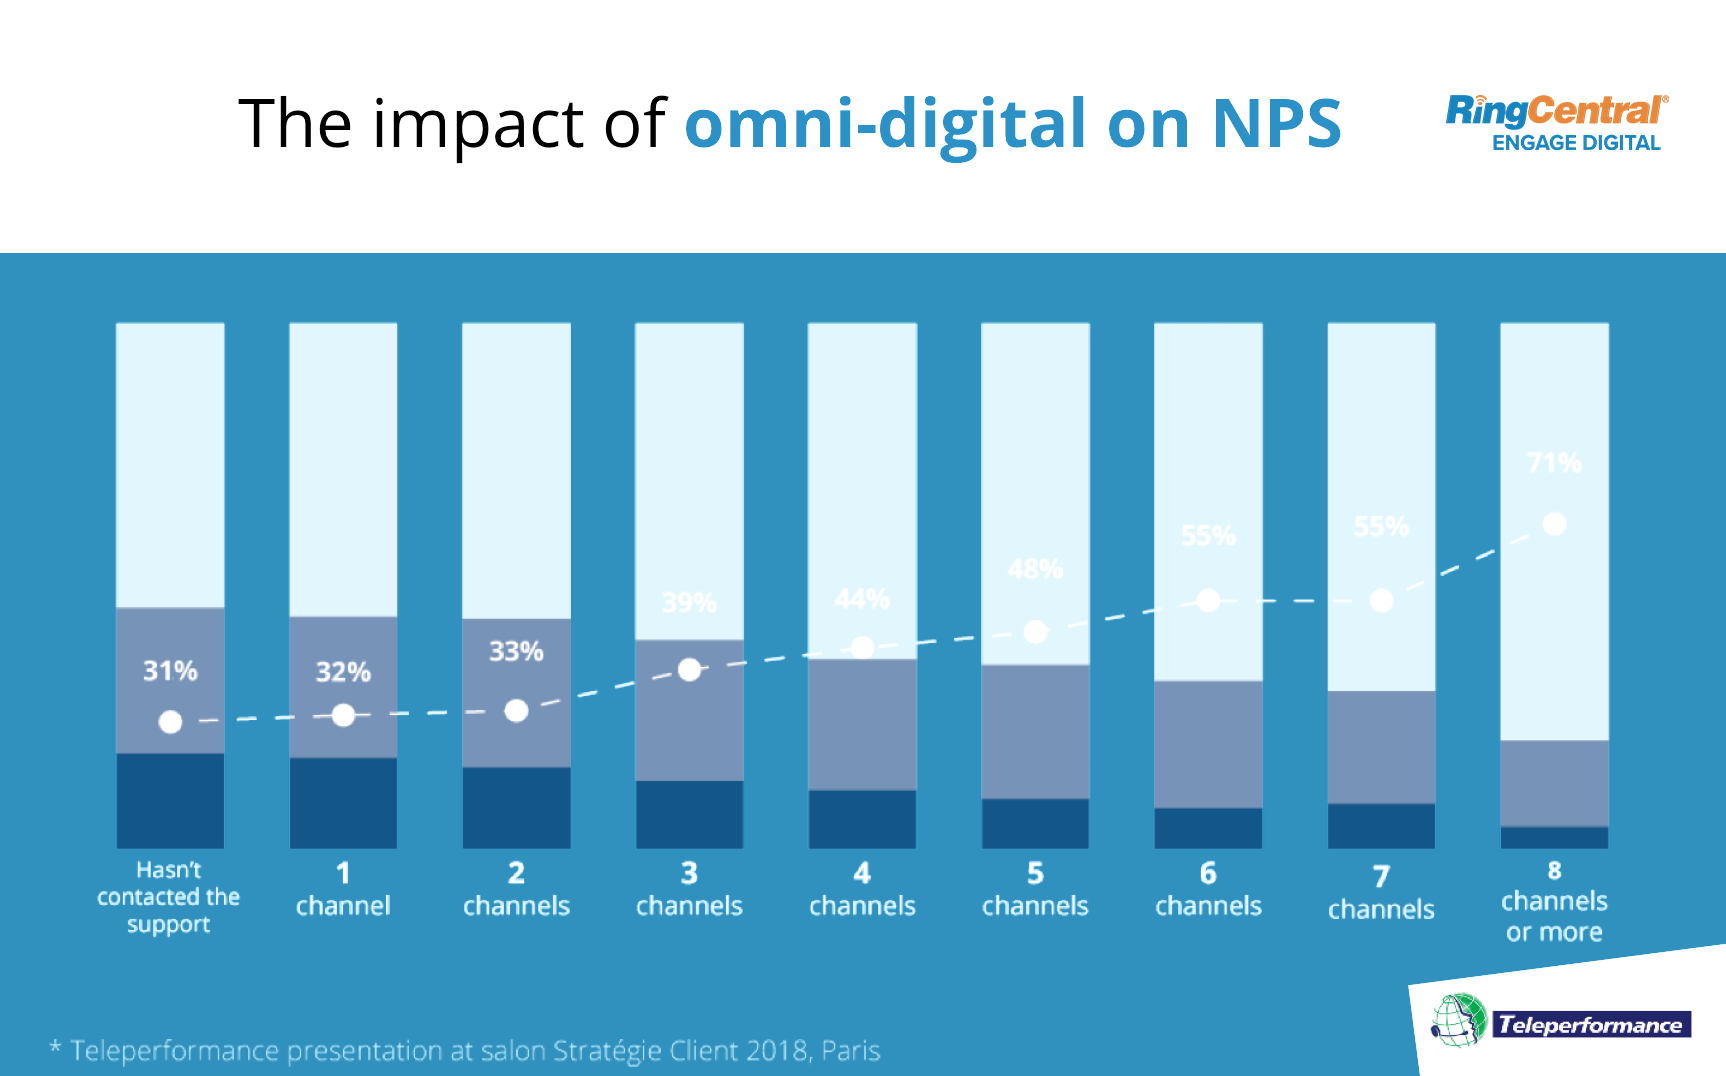 Omni Digital and NPS